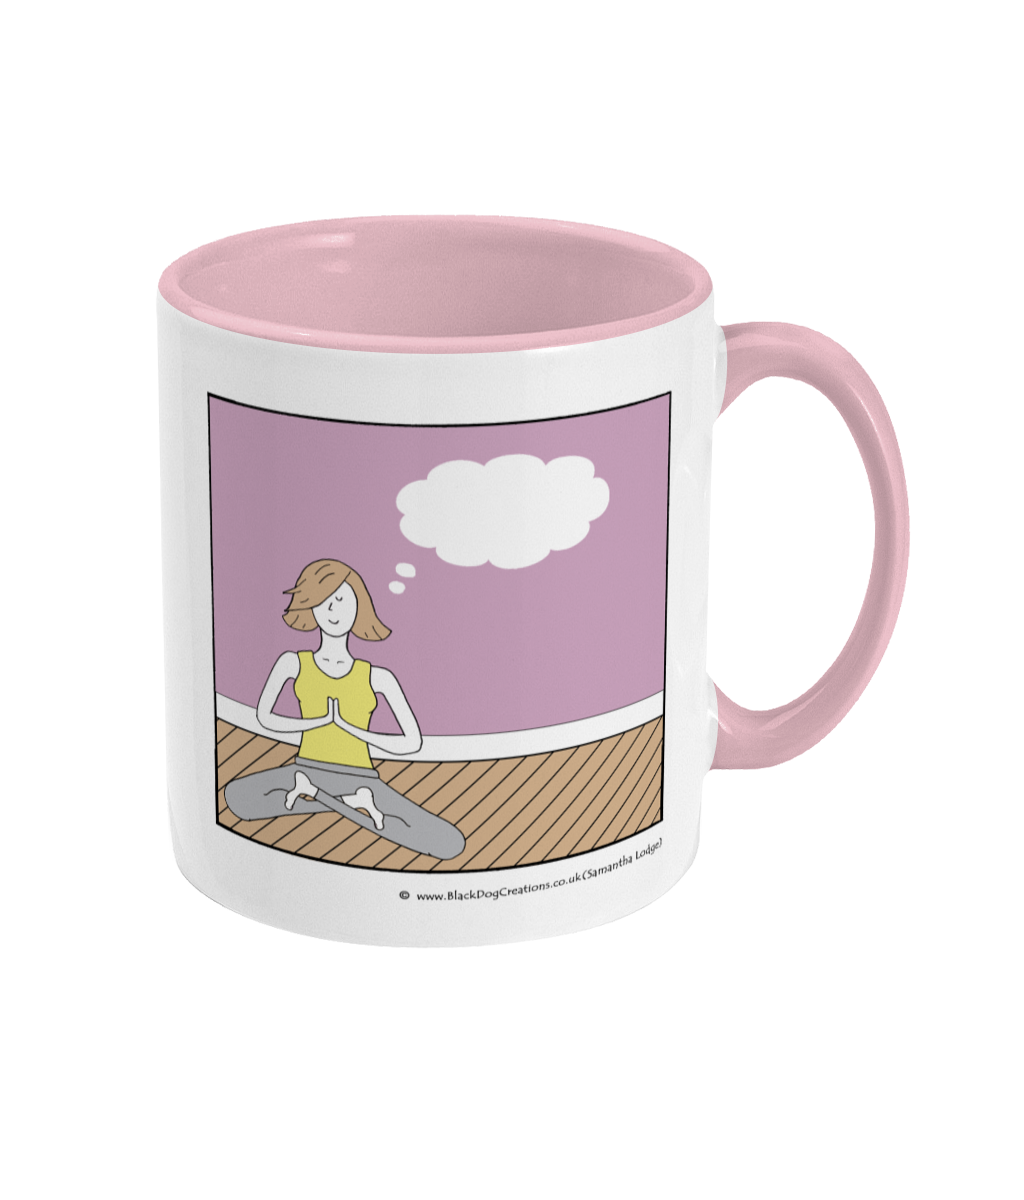 Funny Yoga Coffee Mug-yoga Gifts for Women-mothers Day-yoga Mug-birthday  Gifts For-christmas Gift-mum-mom-bestfriend-girlfriend-her-auntie 